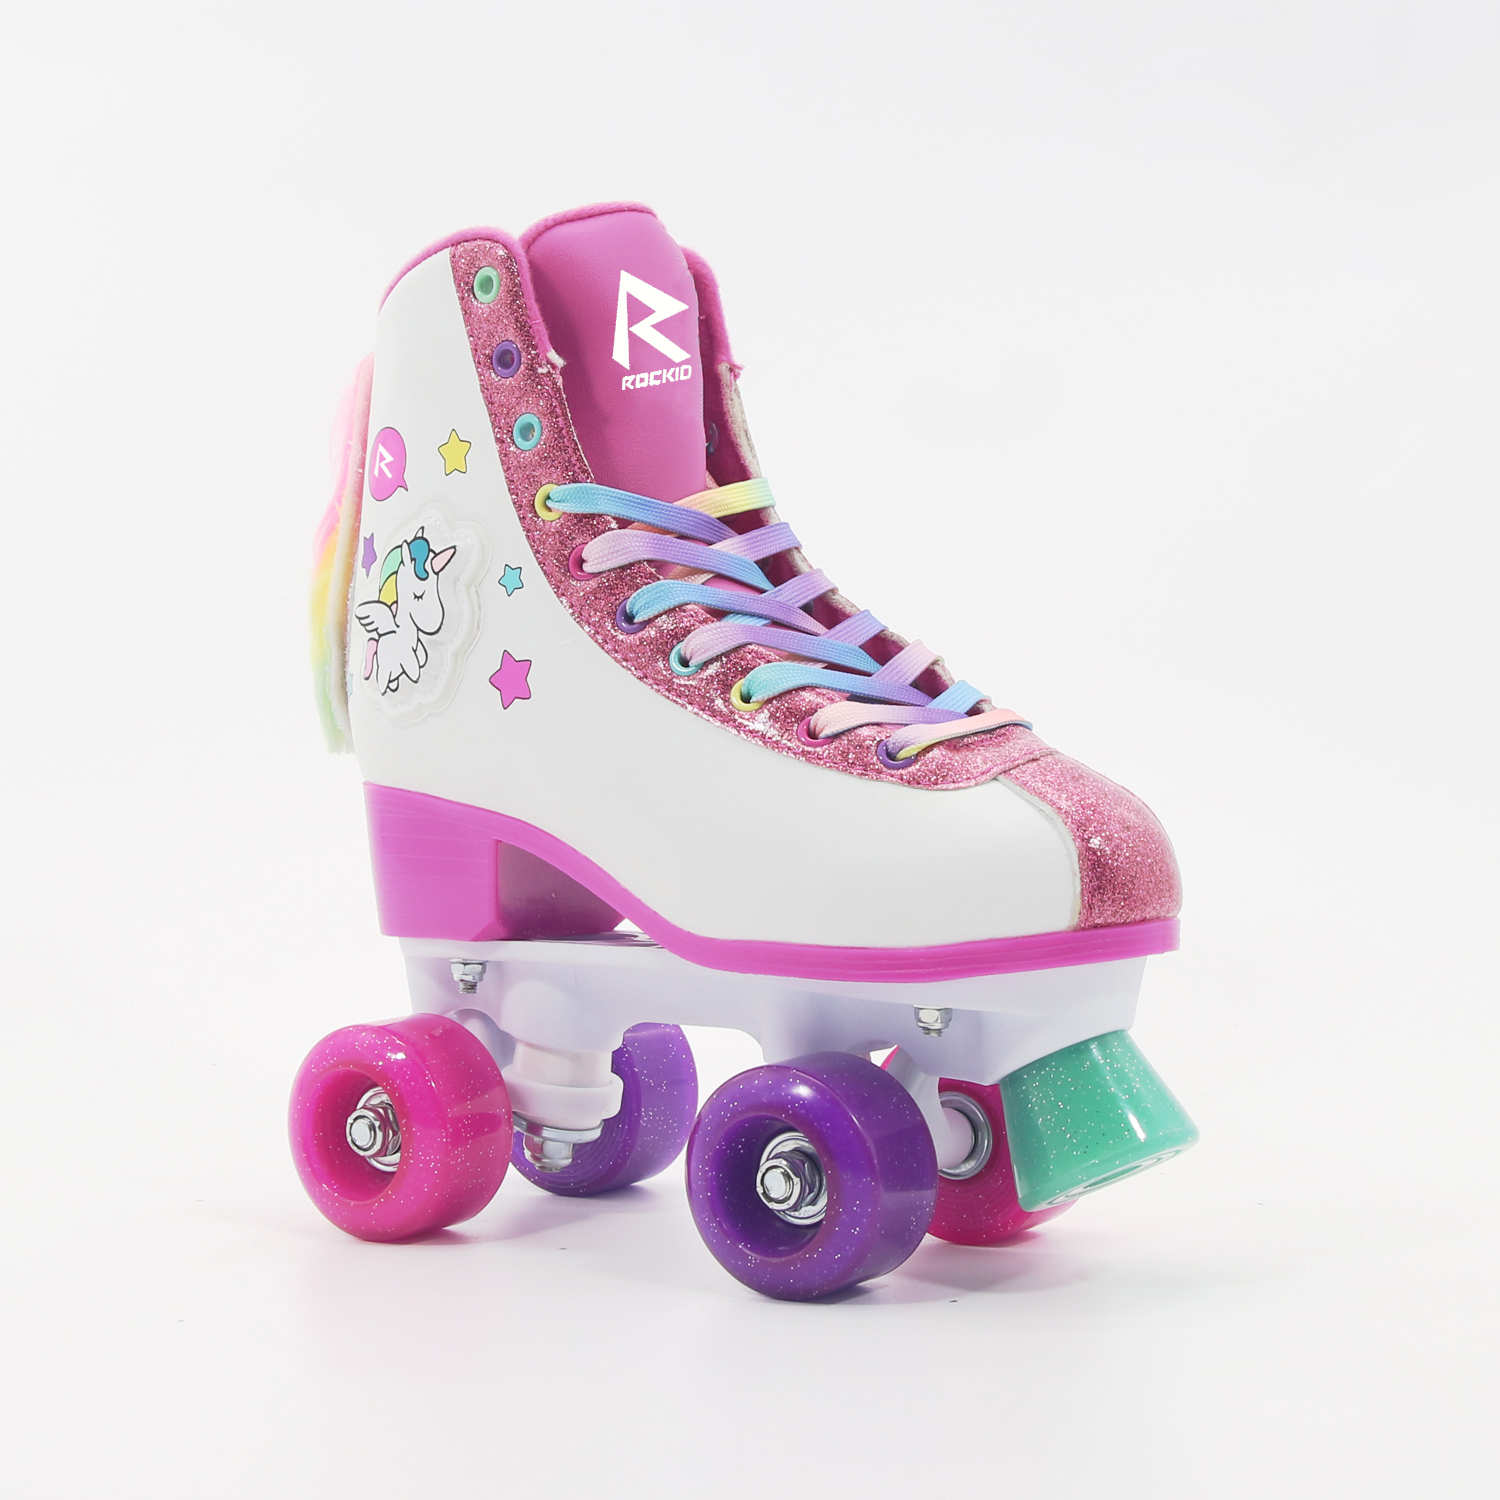 Neuer Flash Semi Soft Glitter Material Quad Roller Skate für Kinder